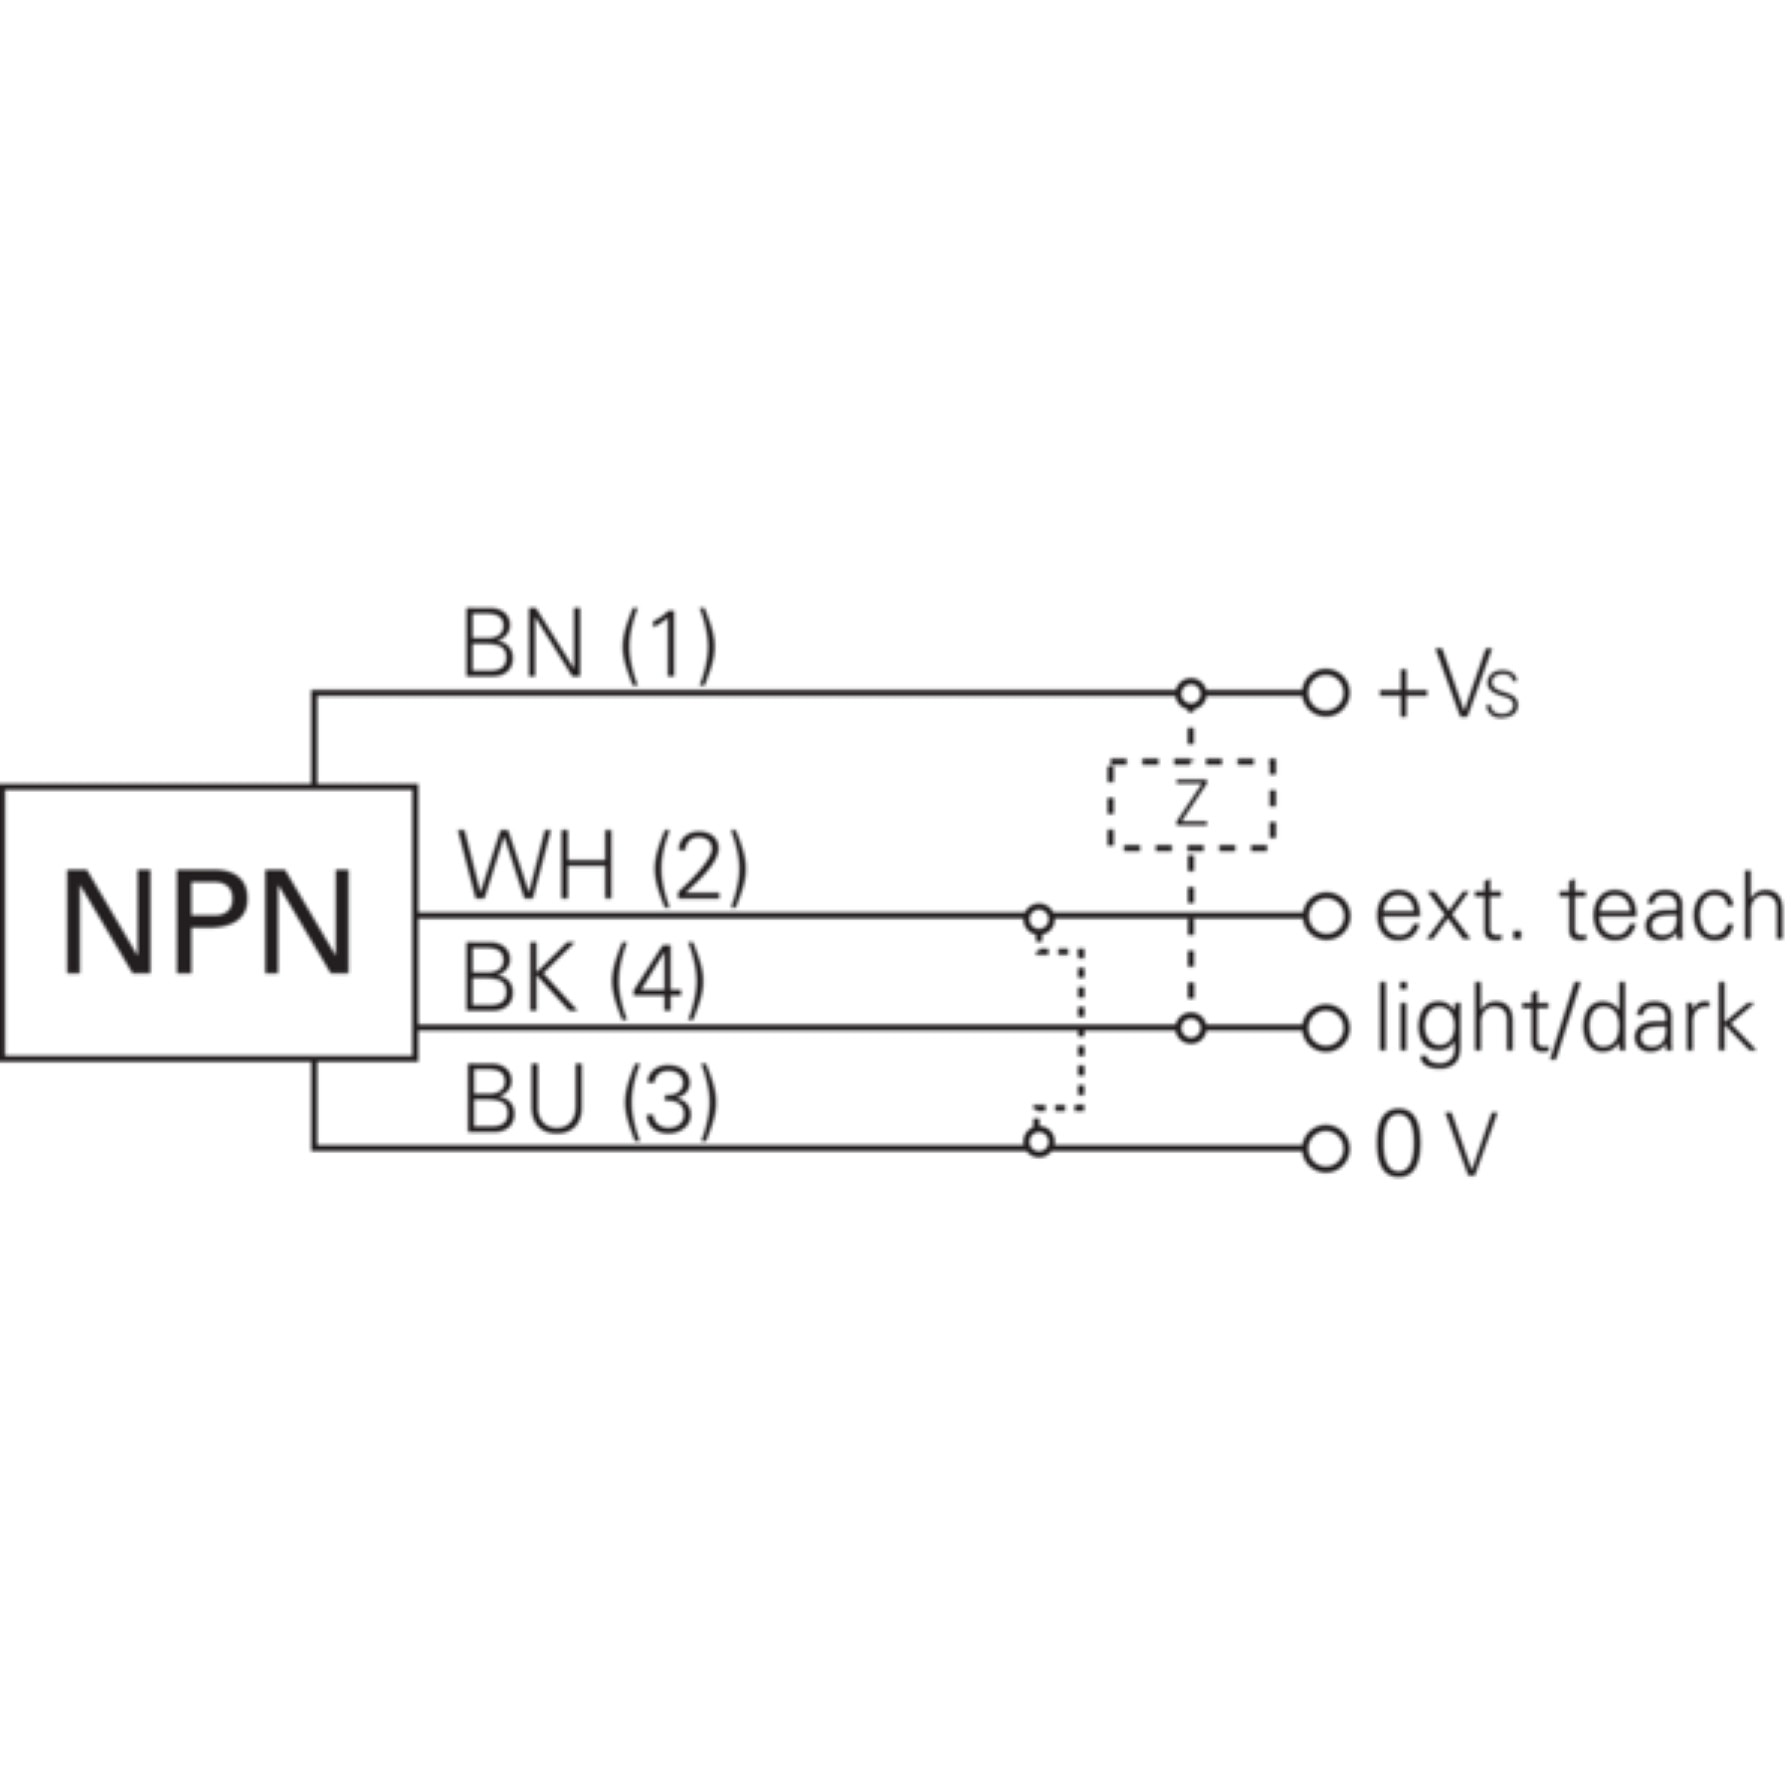 Senzor optic difuz cu suprimarea fundalului FHCK 07N6901, Part  no.101520831, Baumer, NPN NO/NC, ajustare prin teach